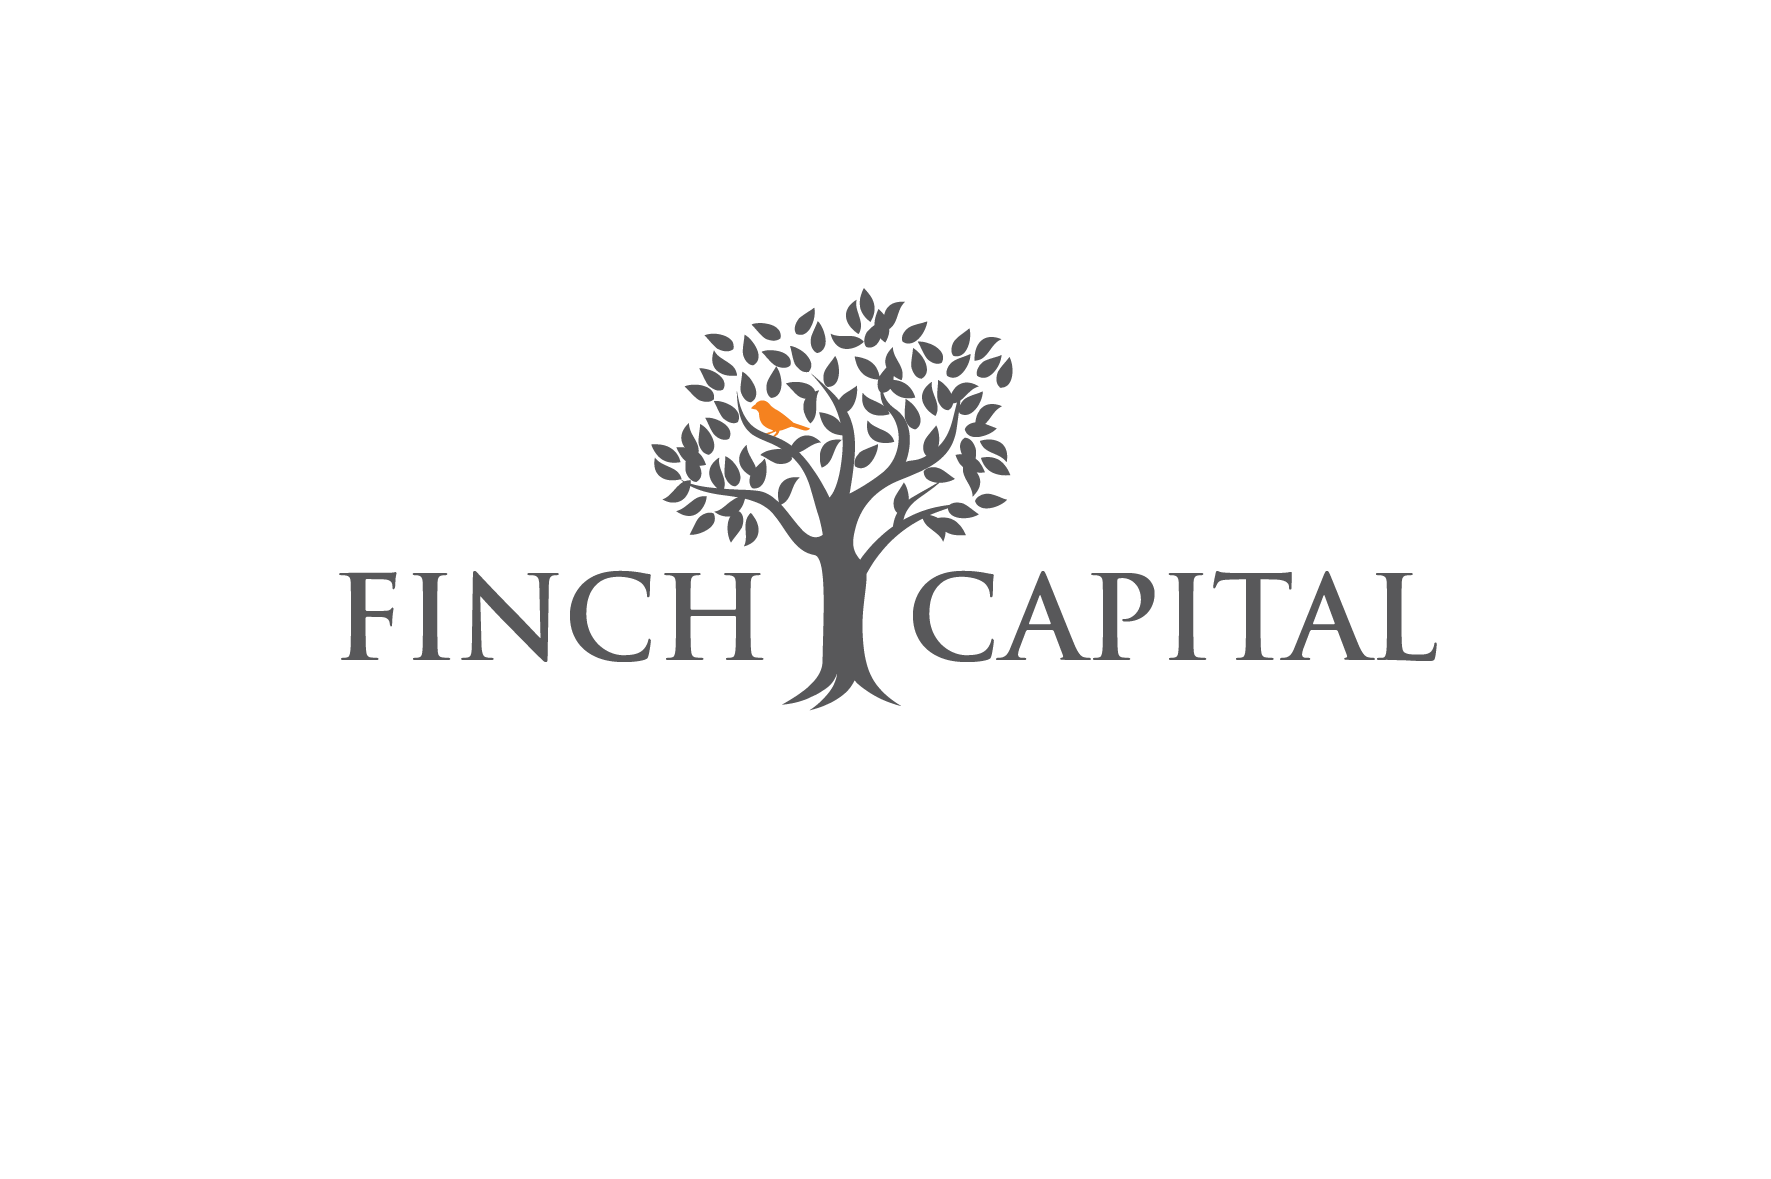 Finch Capital logo